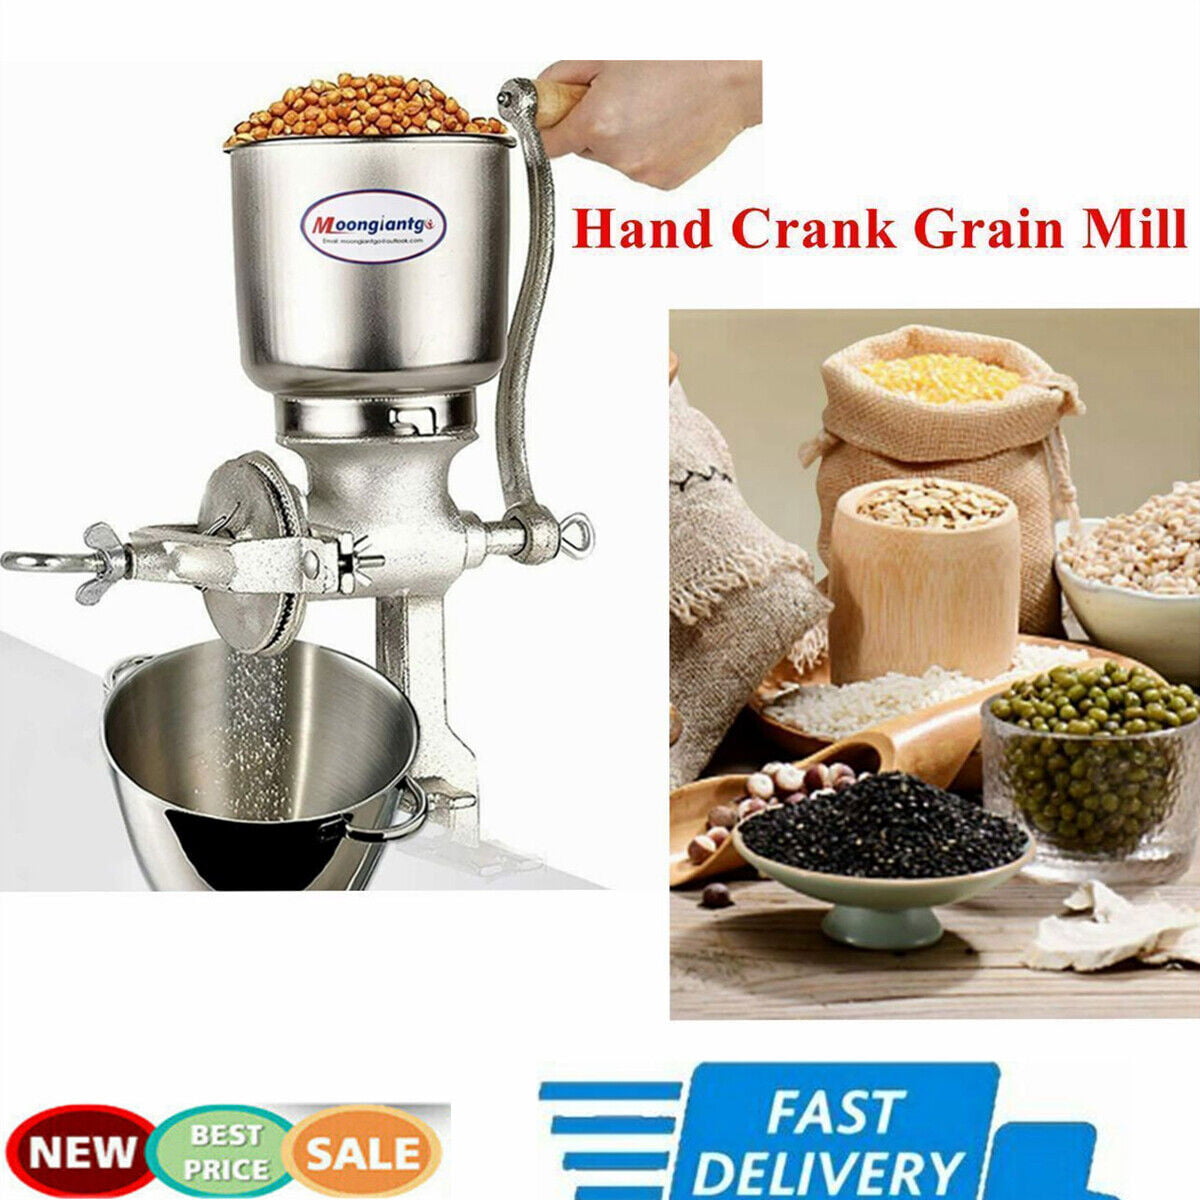  H-YEEU Grain Mill Hand Crank,Stainless Steel Manual